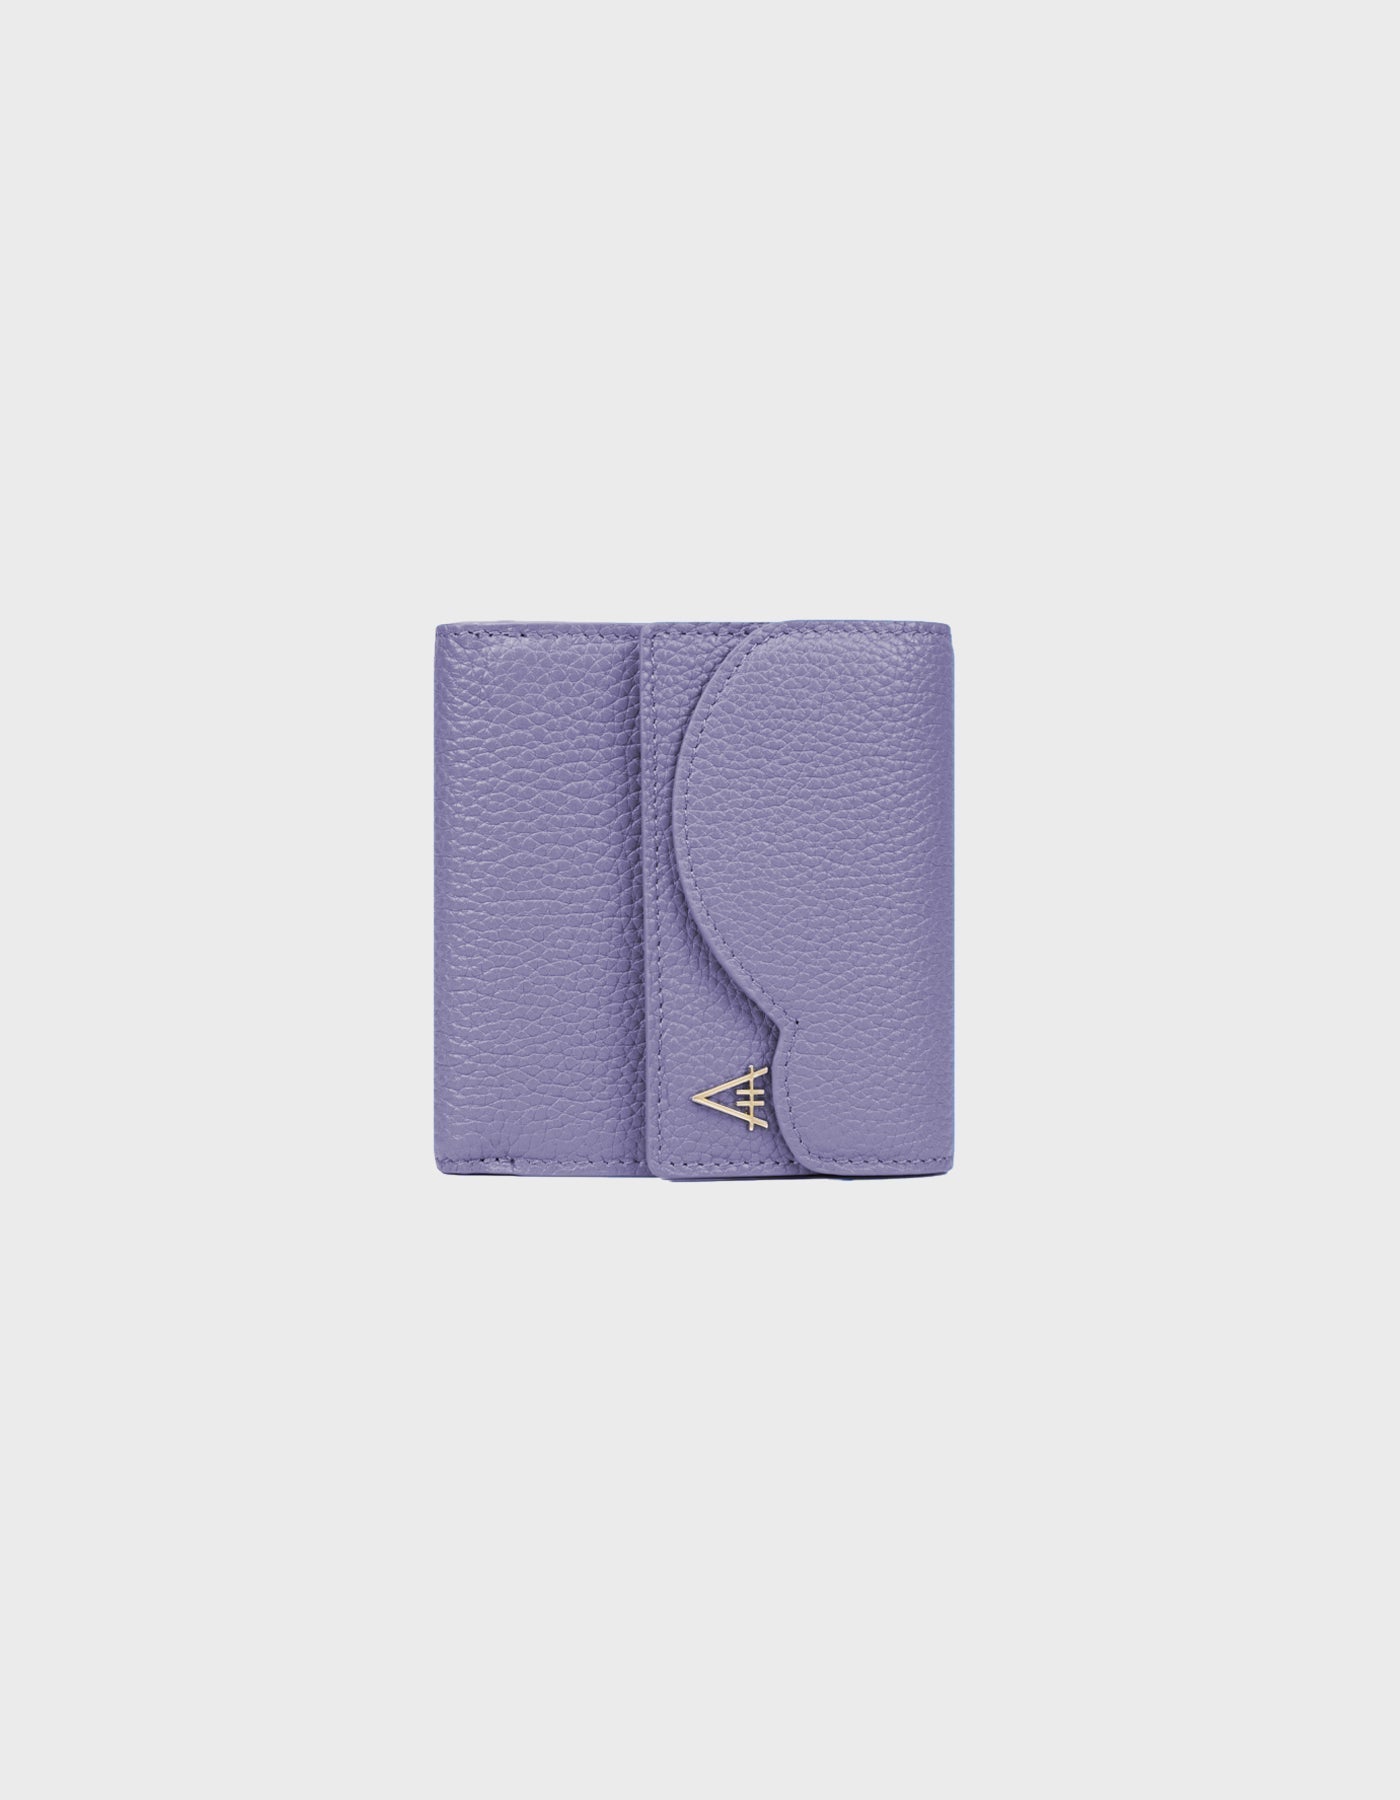 HiVa Atelier | Larus Compact Wallet Lavender | Beautiful and Versatile